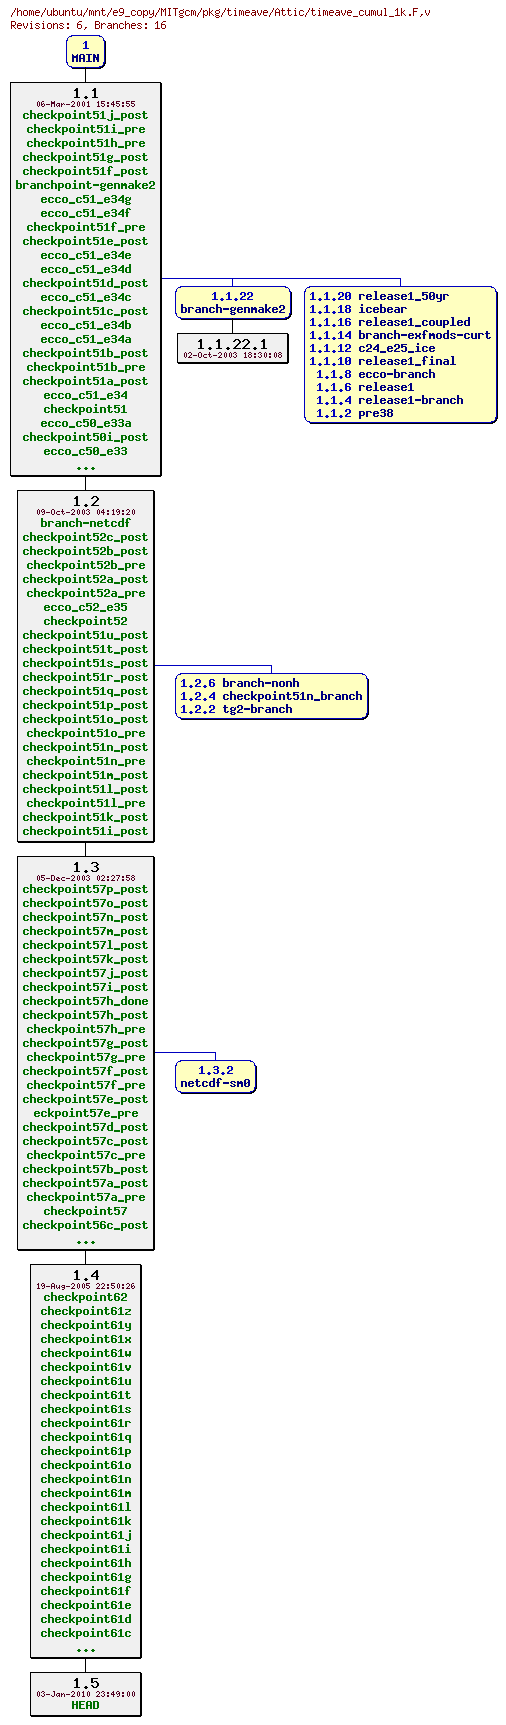 Revisions of MITgcm/pkg/timeave/timeave_cumul_1k.F